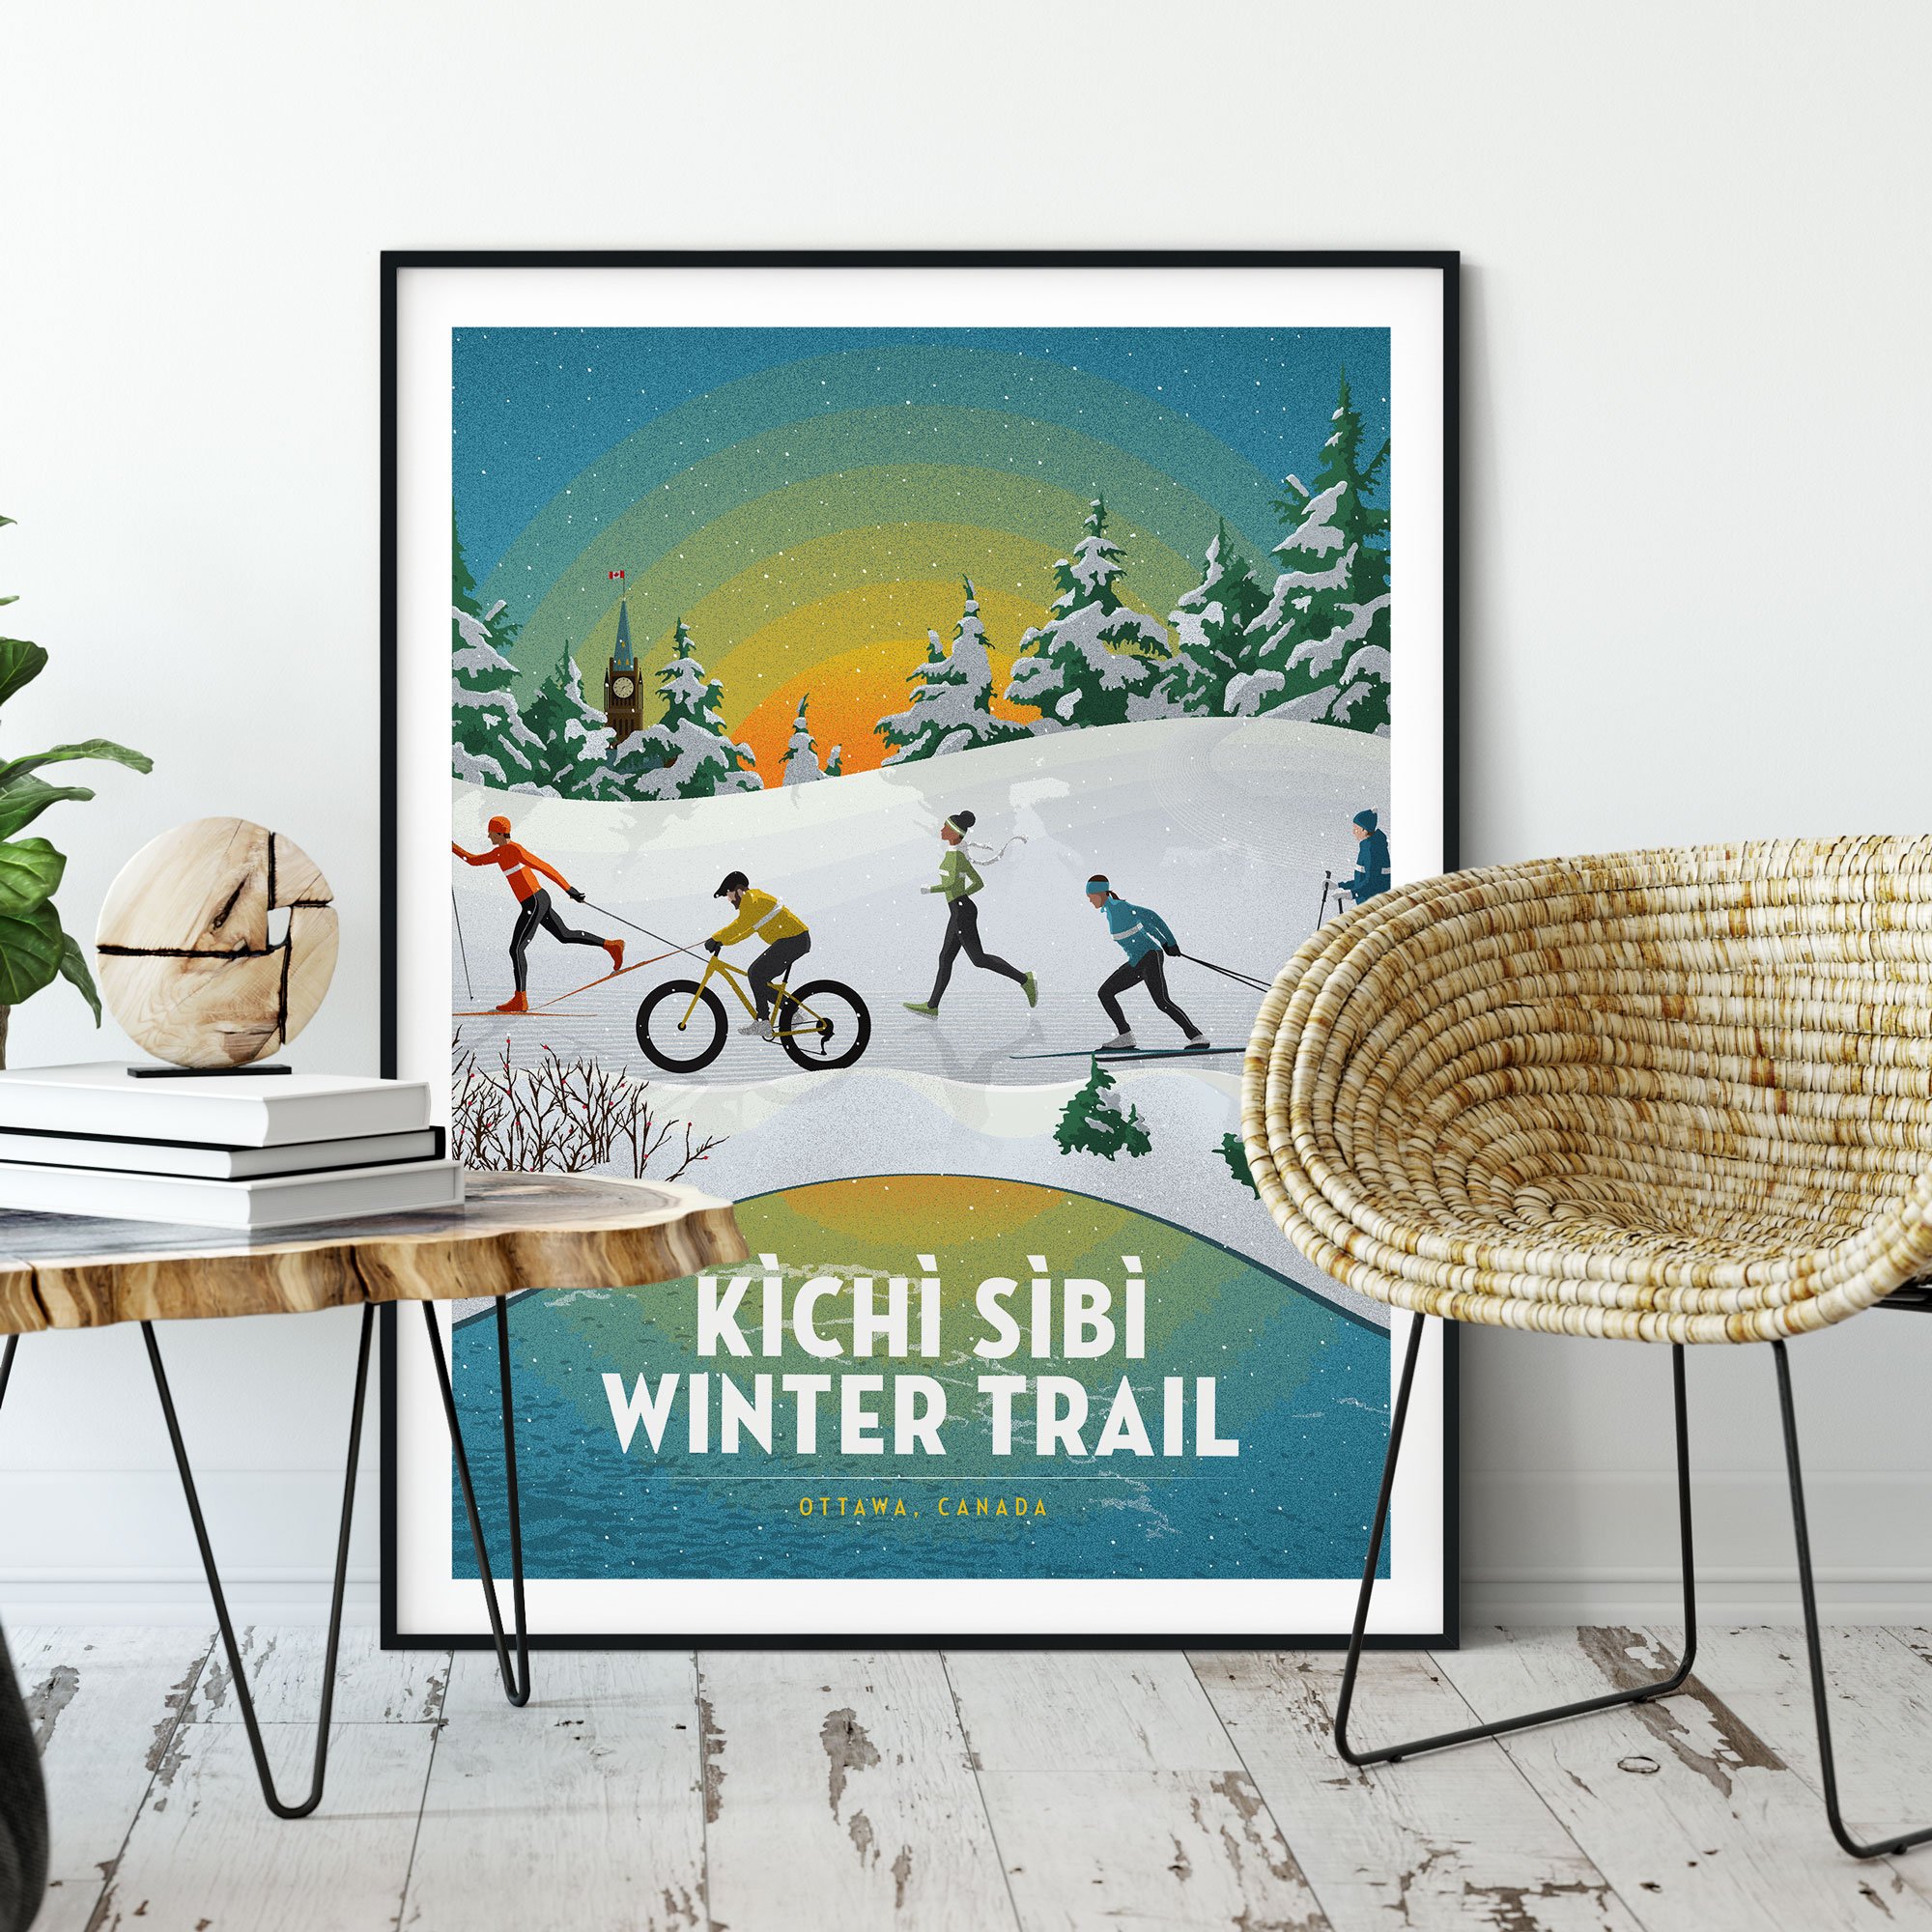 Kichi Sibi Winter Trail